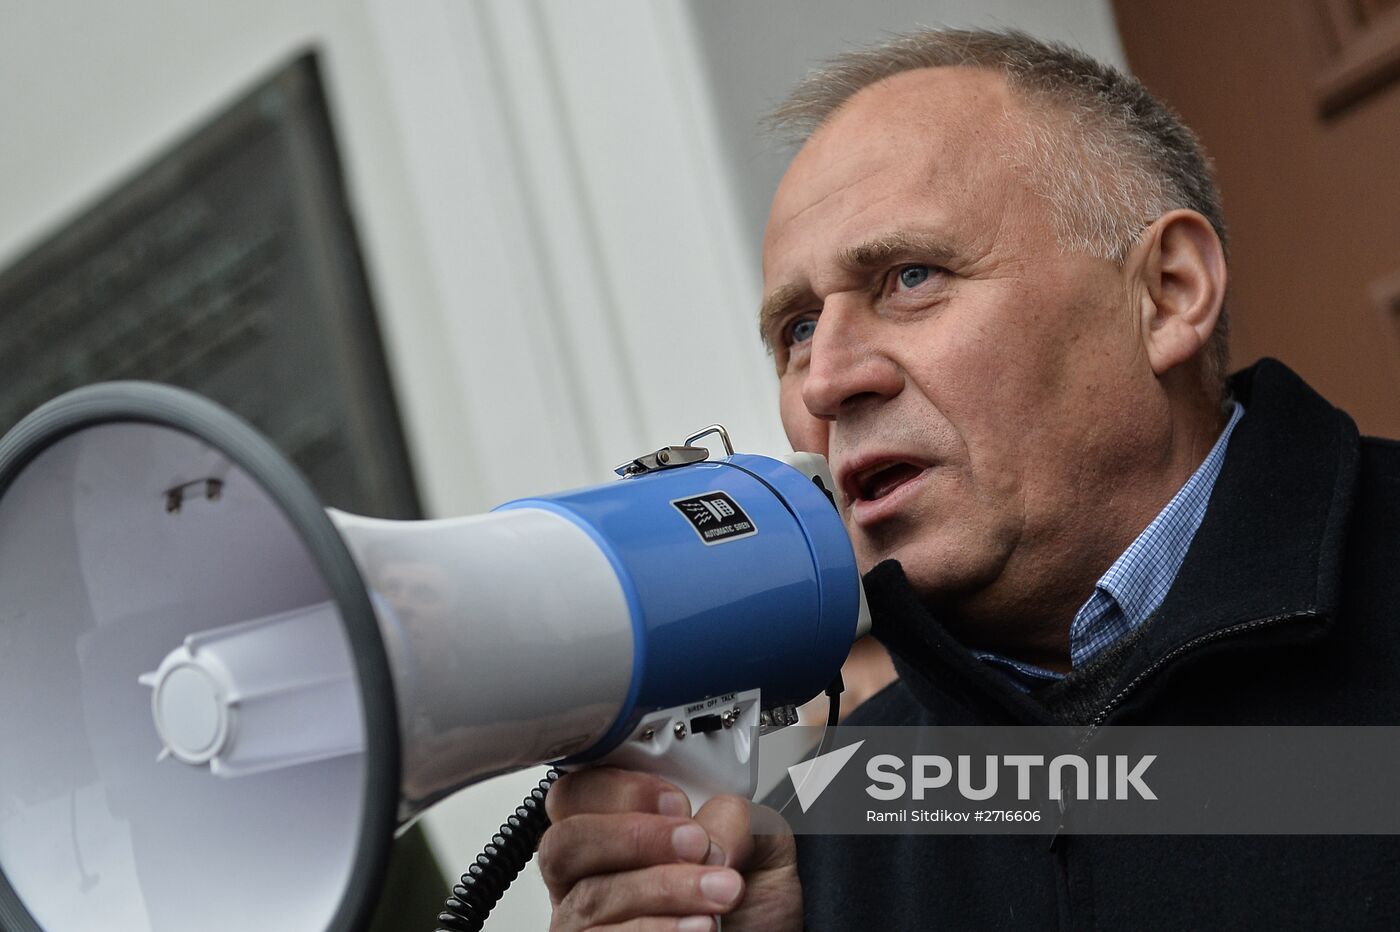 Opposition rally in Minsk